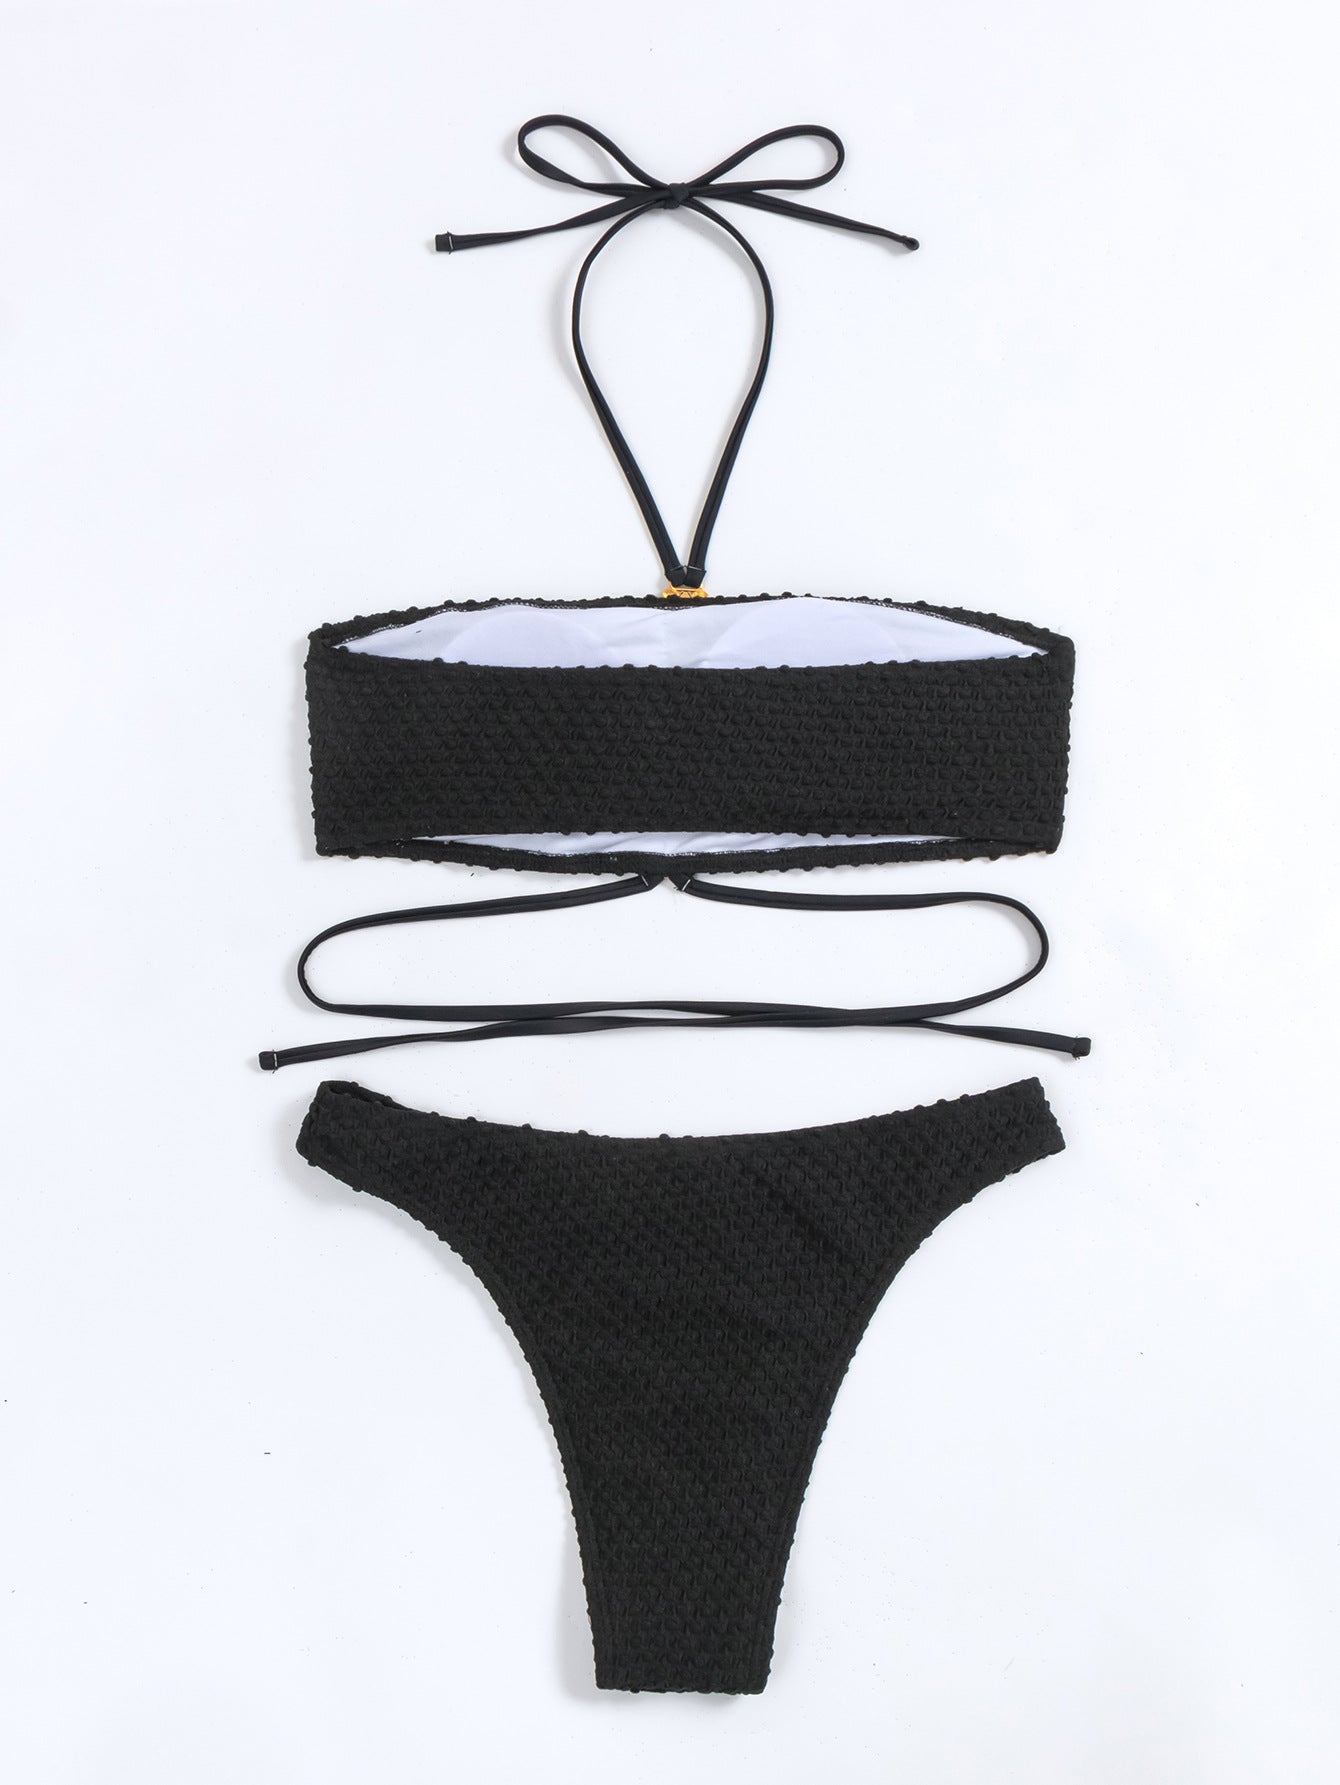 Big Diamond Chain Sexy Bikini Women Swimsuit – DM1111, LLC